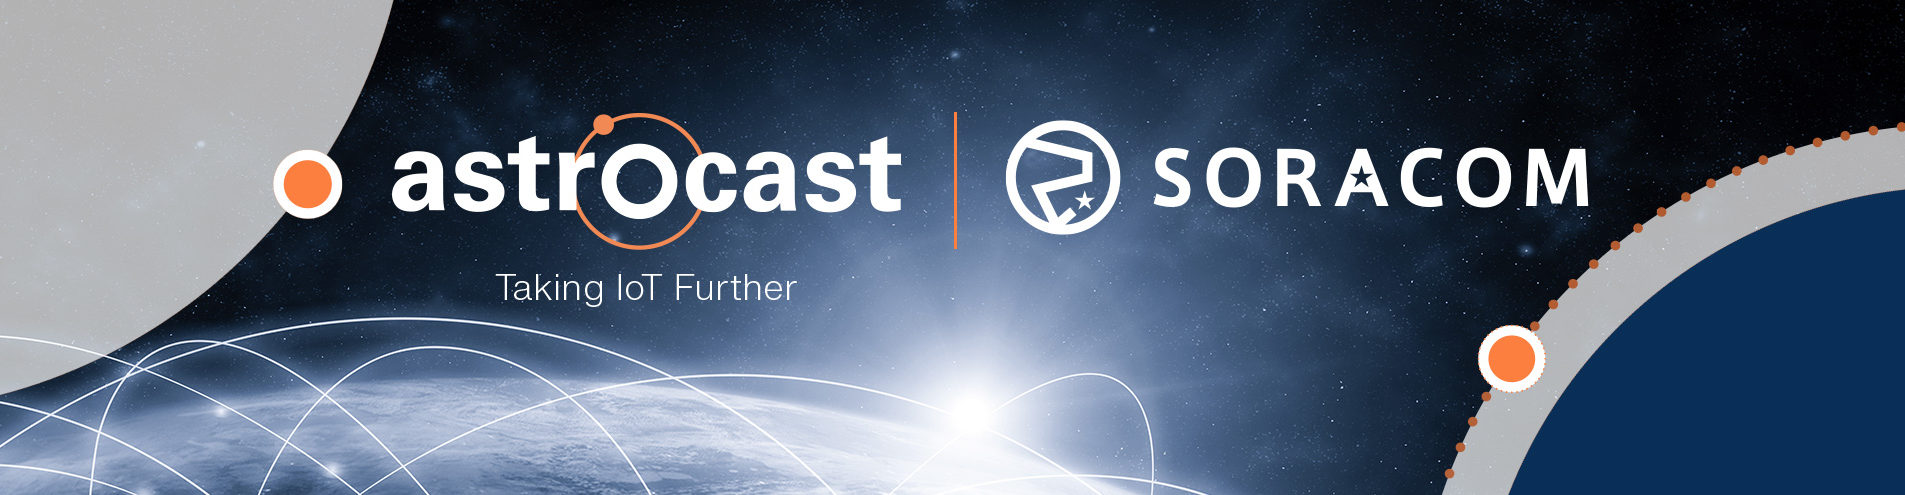 astrocast-soracom_press-release-satellite-iot-1920x495px